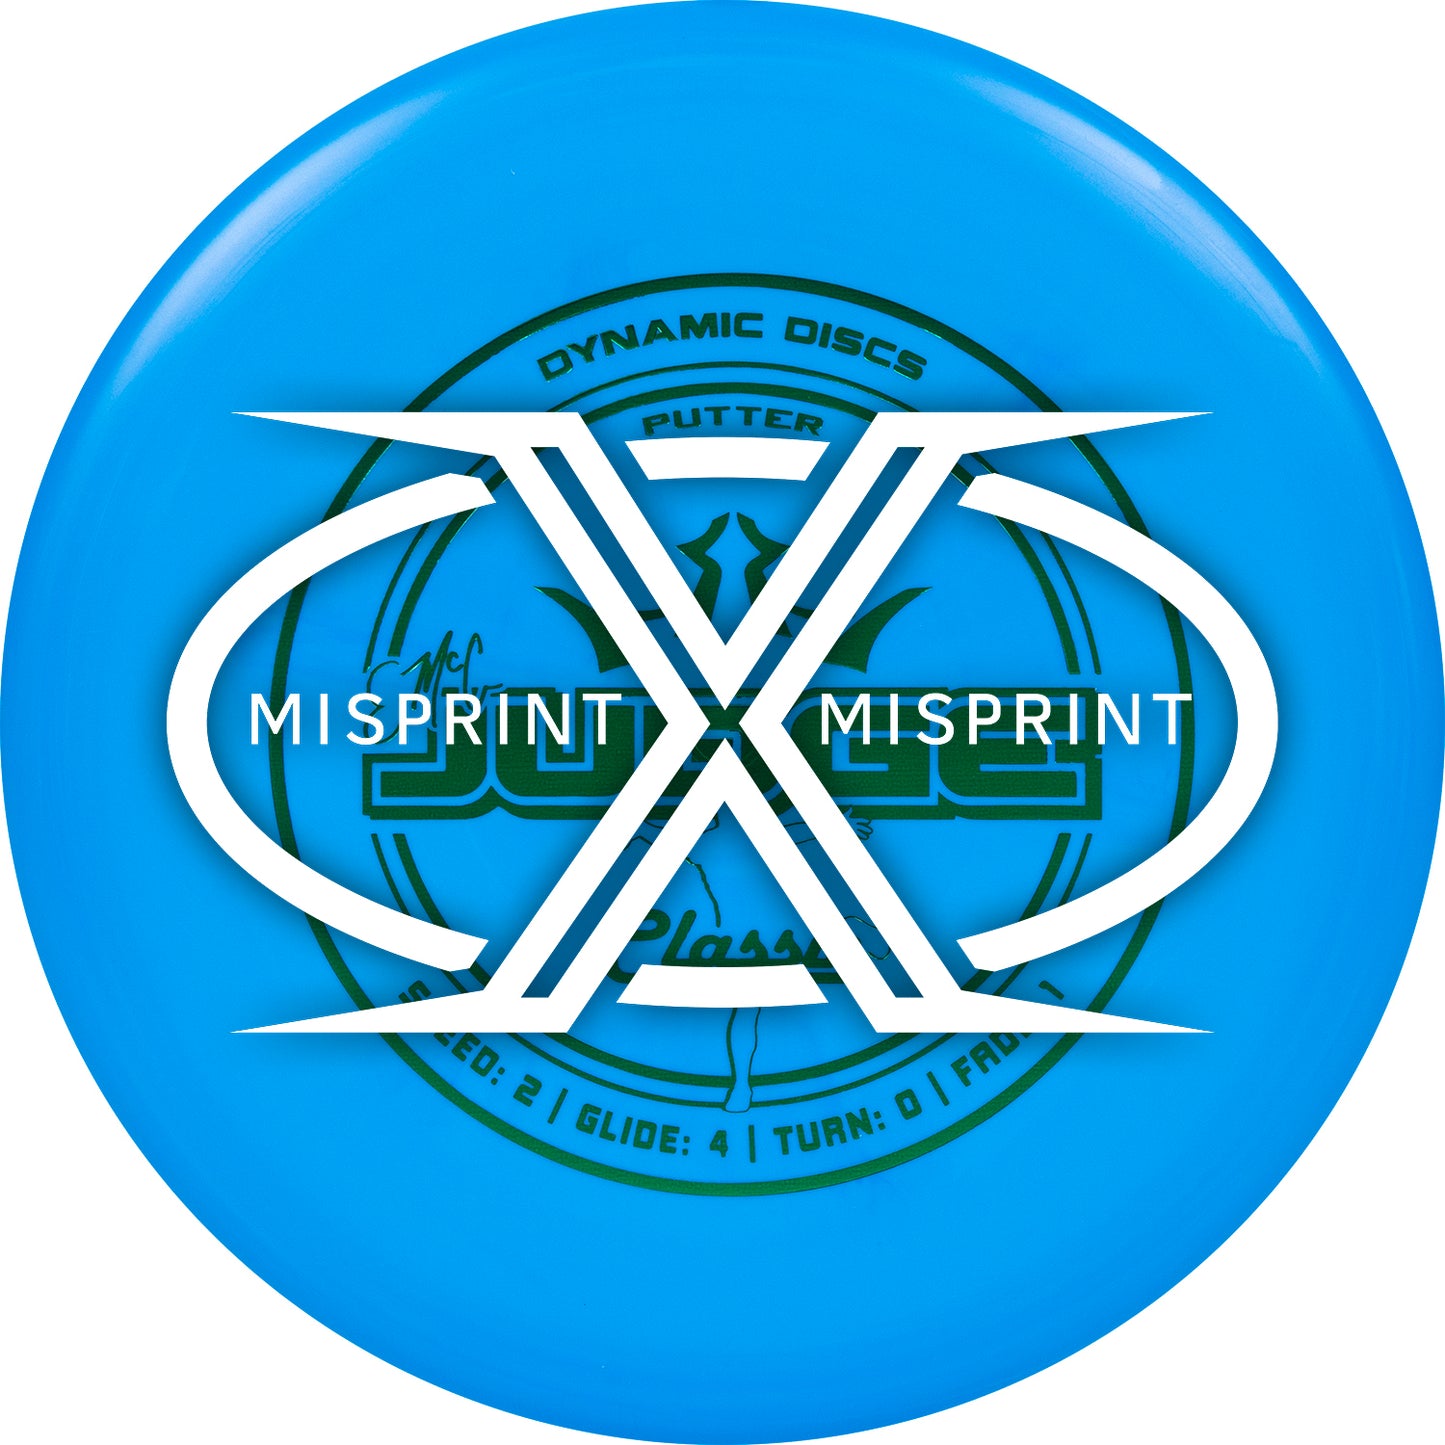 Misprint Dynamic Discs Classic EMAC Judge